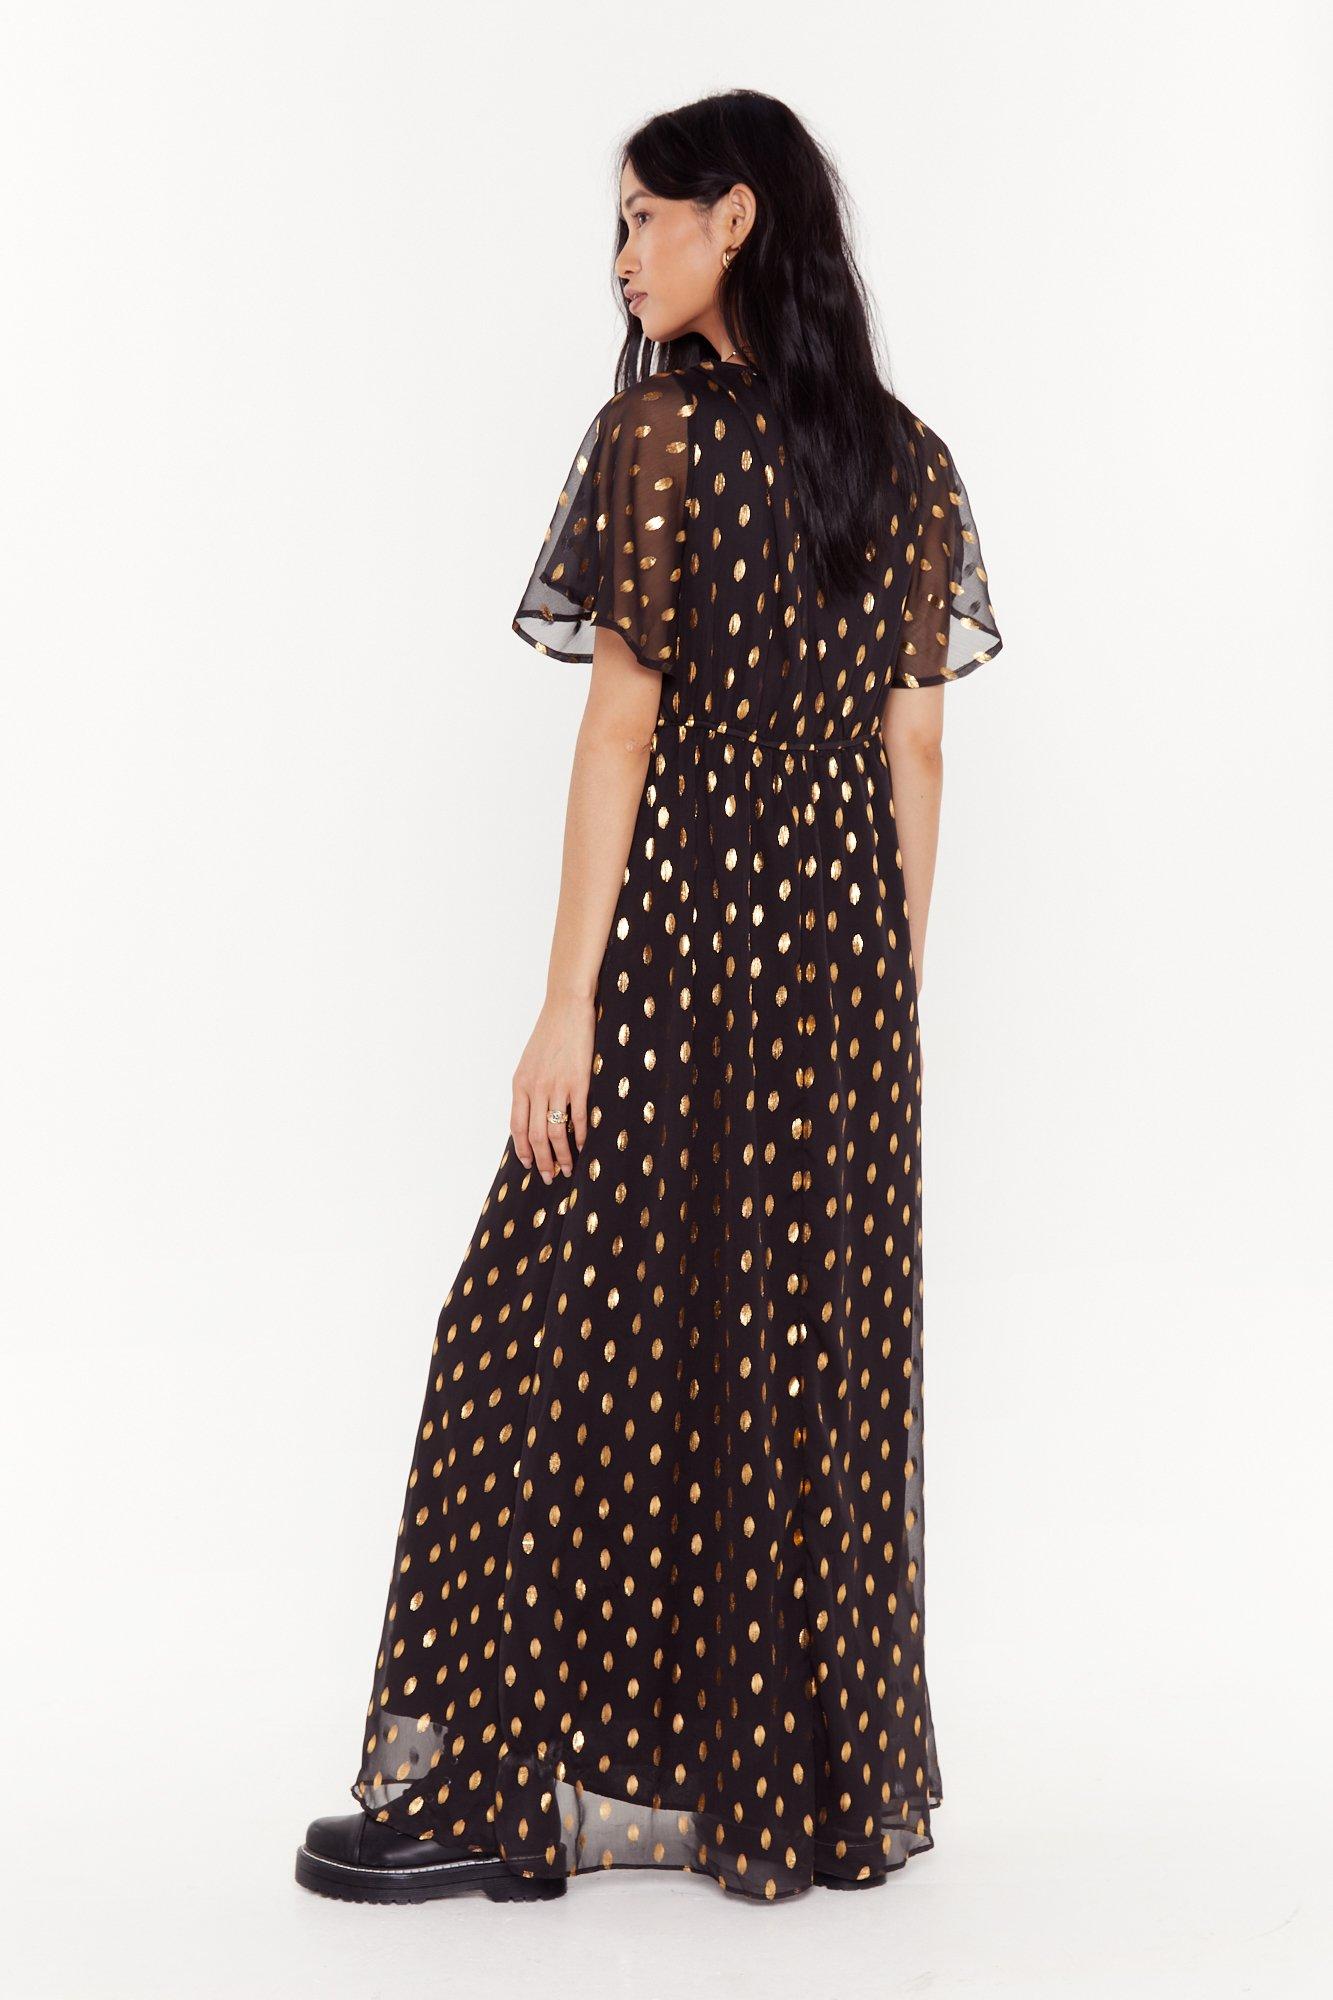 leopard strap dress